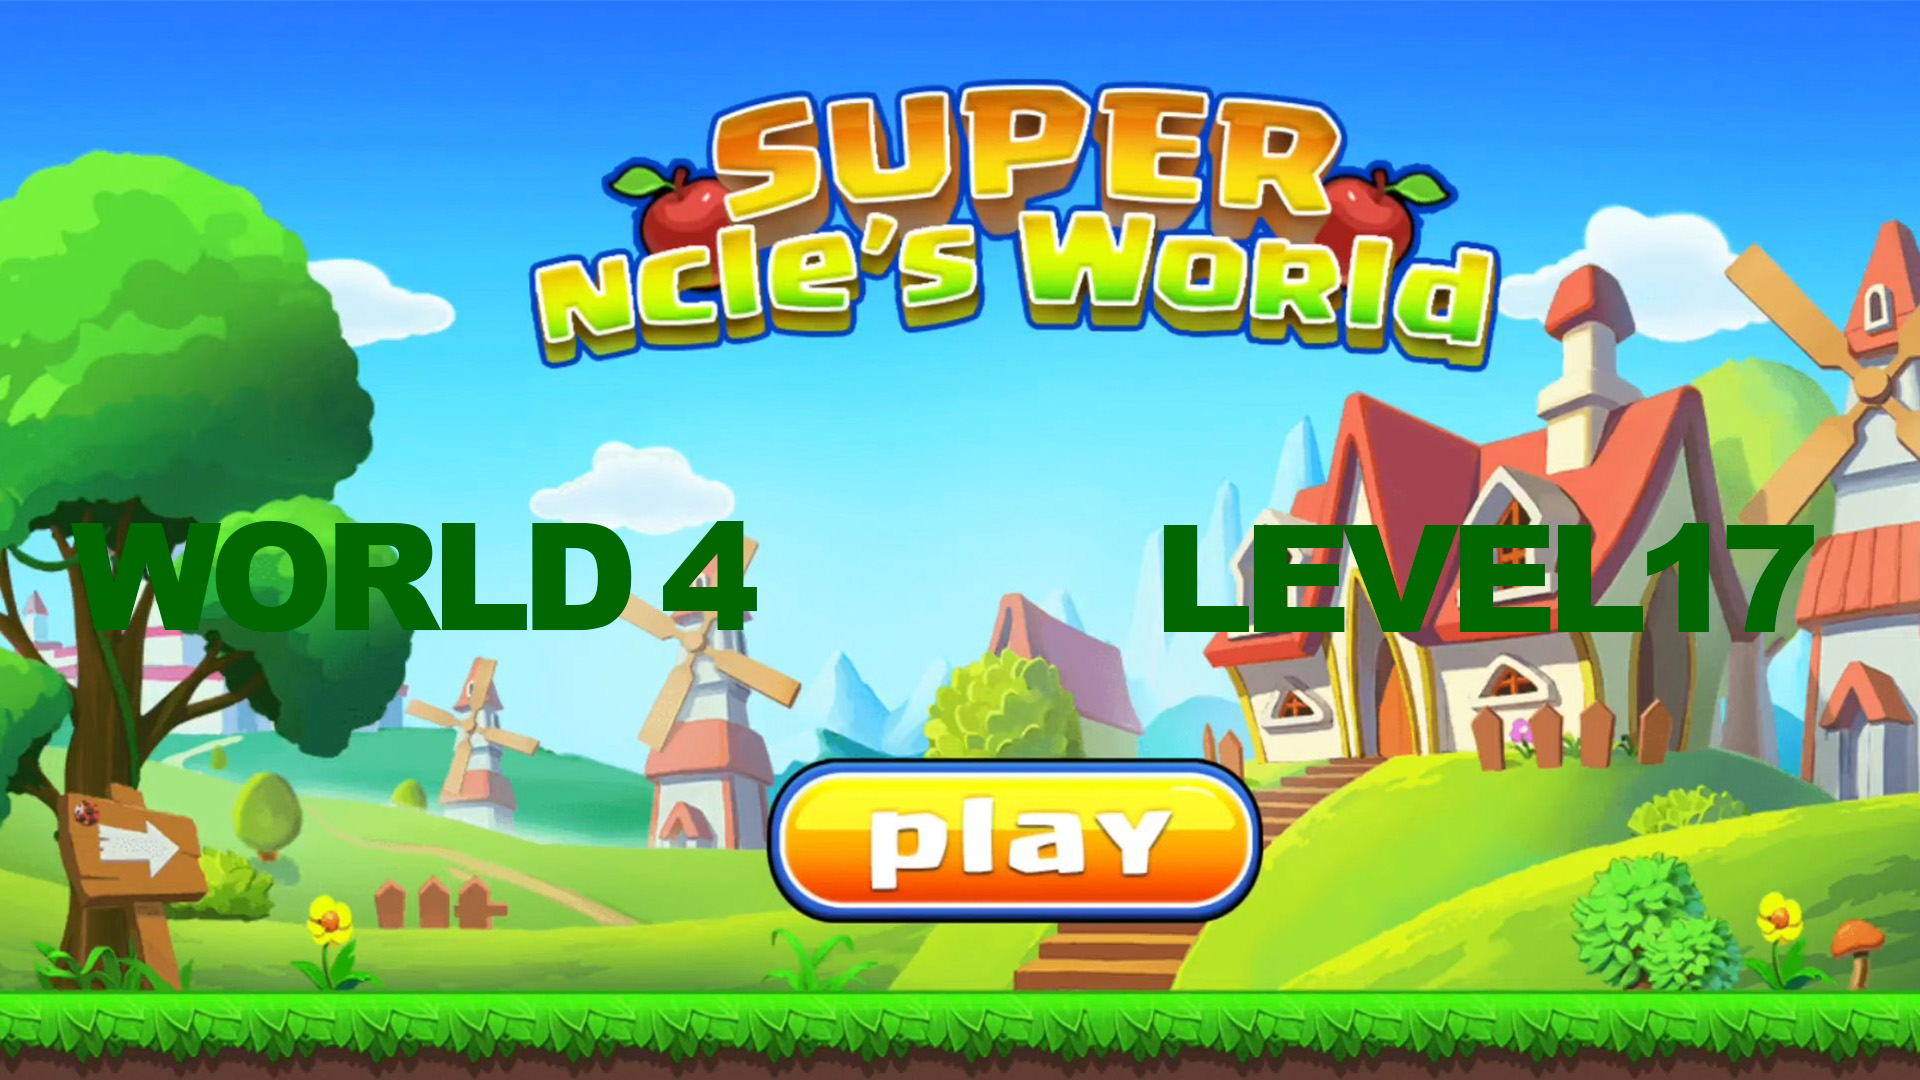 Super ncle's  World 4. Level 17.